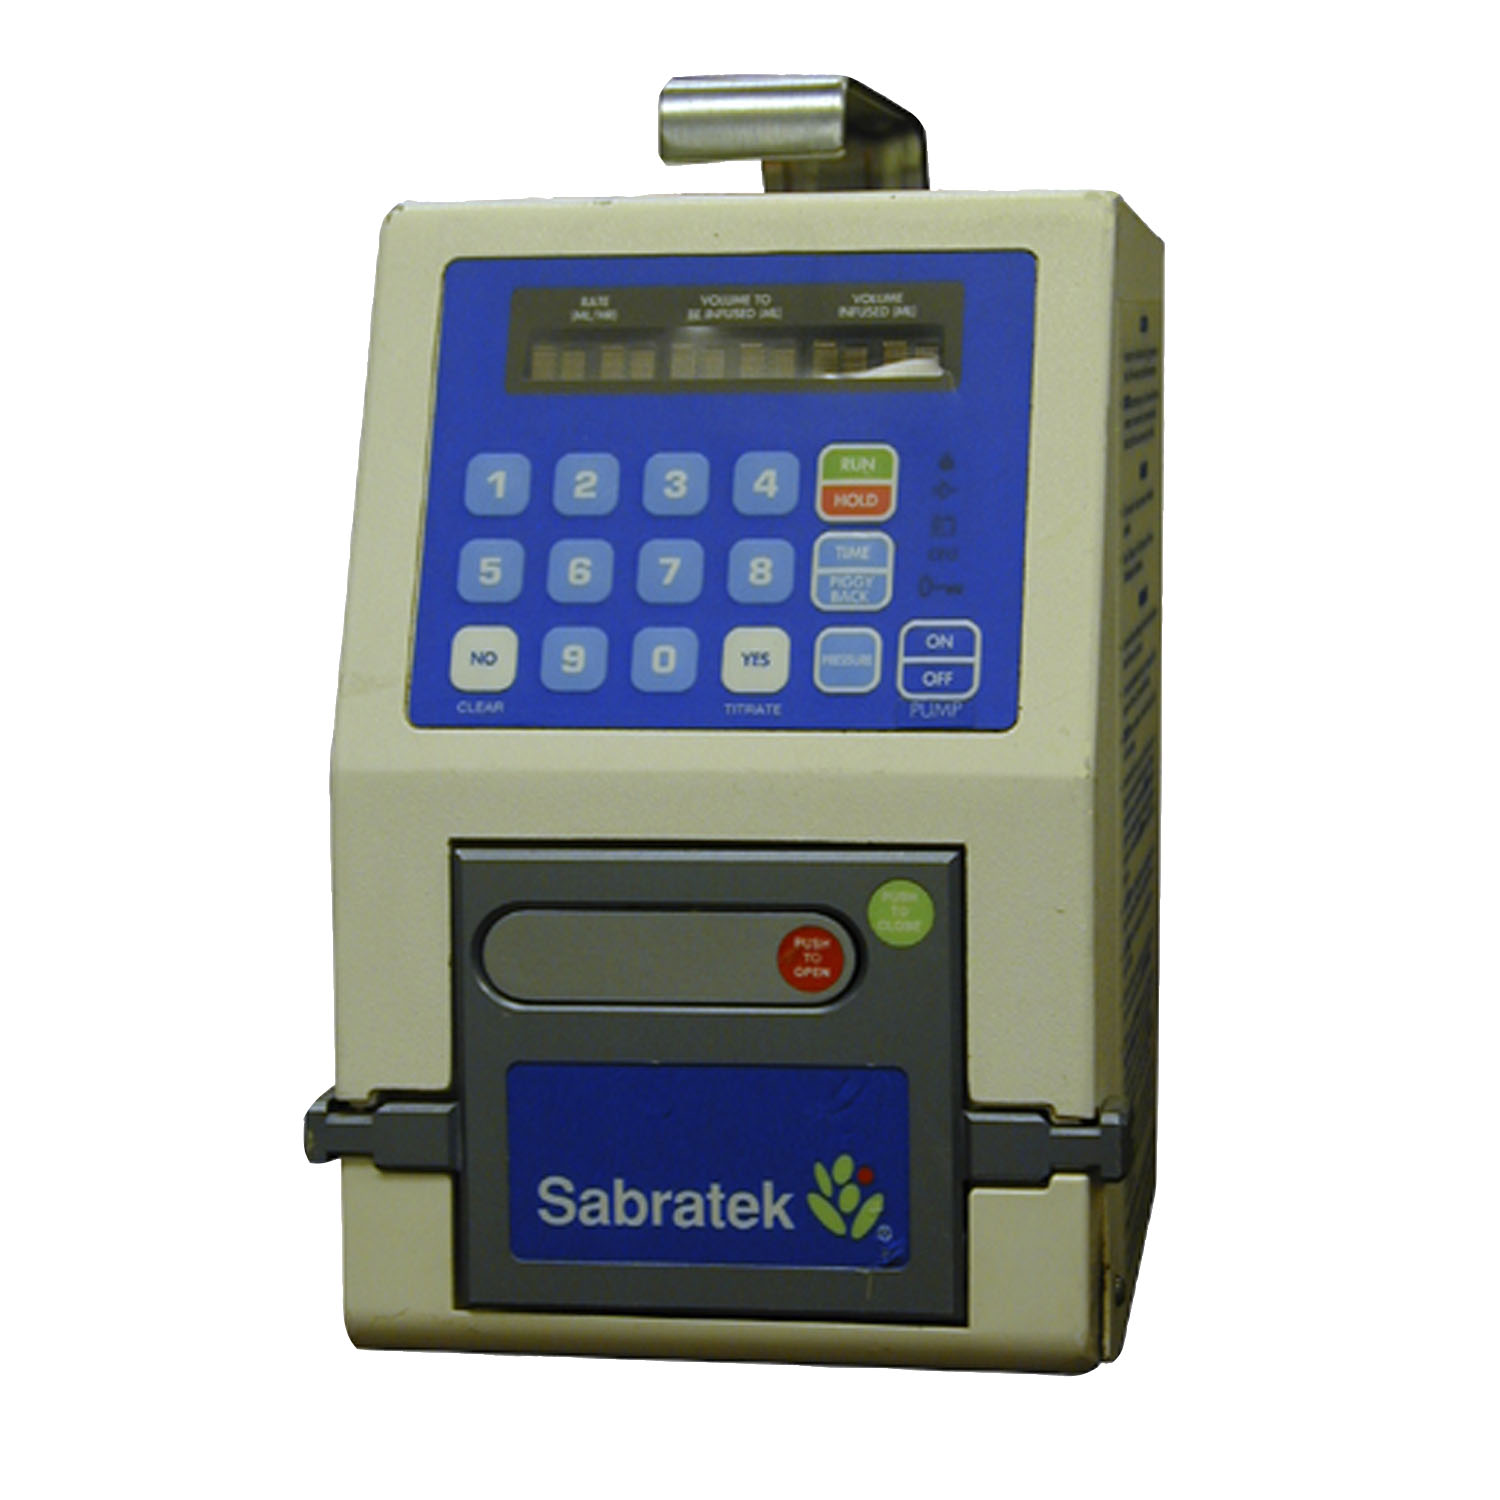 Refurbished or Used Baxter Sabratek 3030 IV Infusion Pump Avante